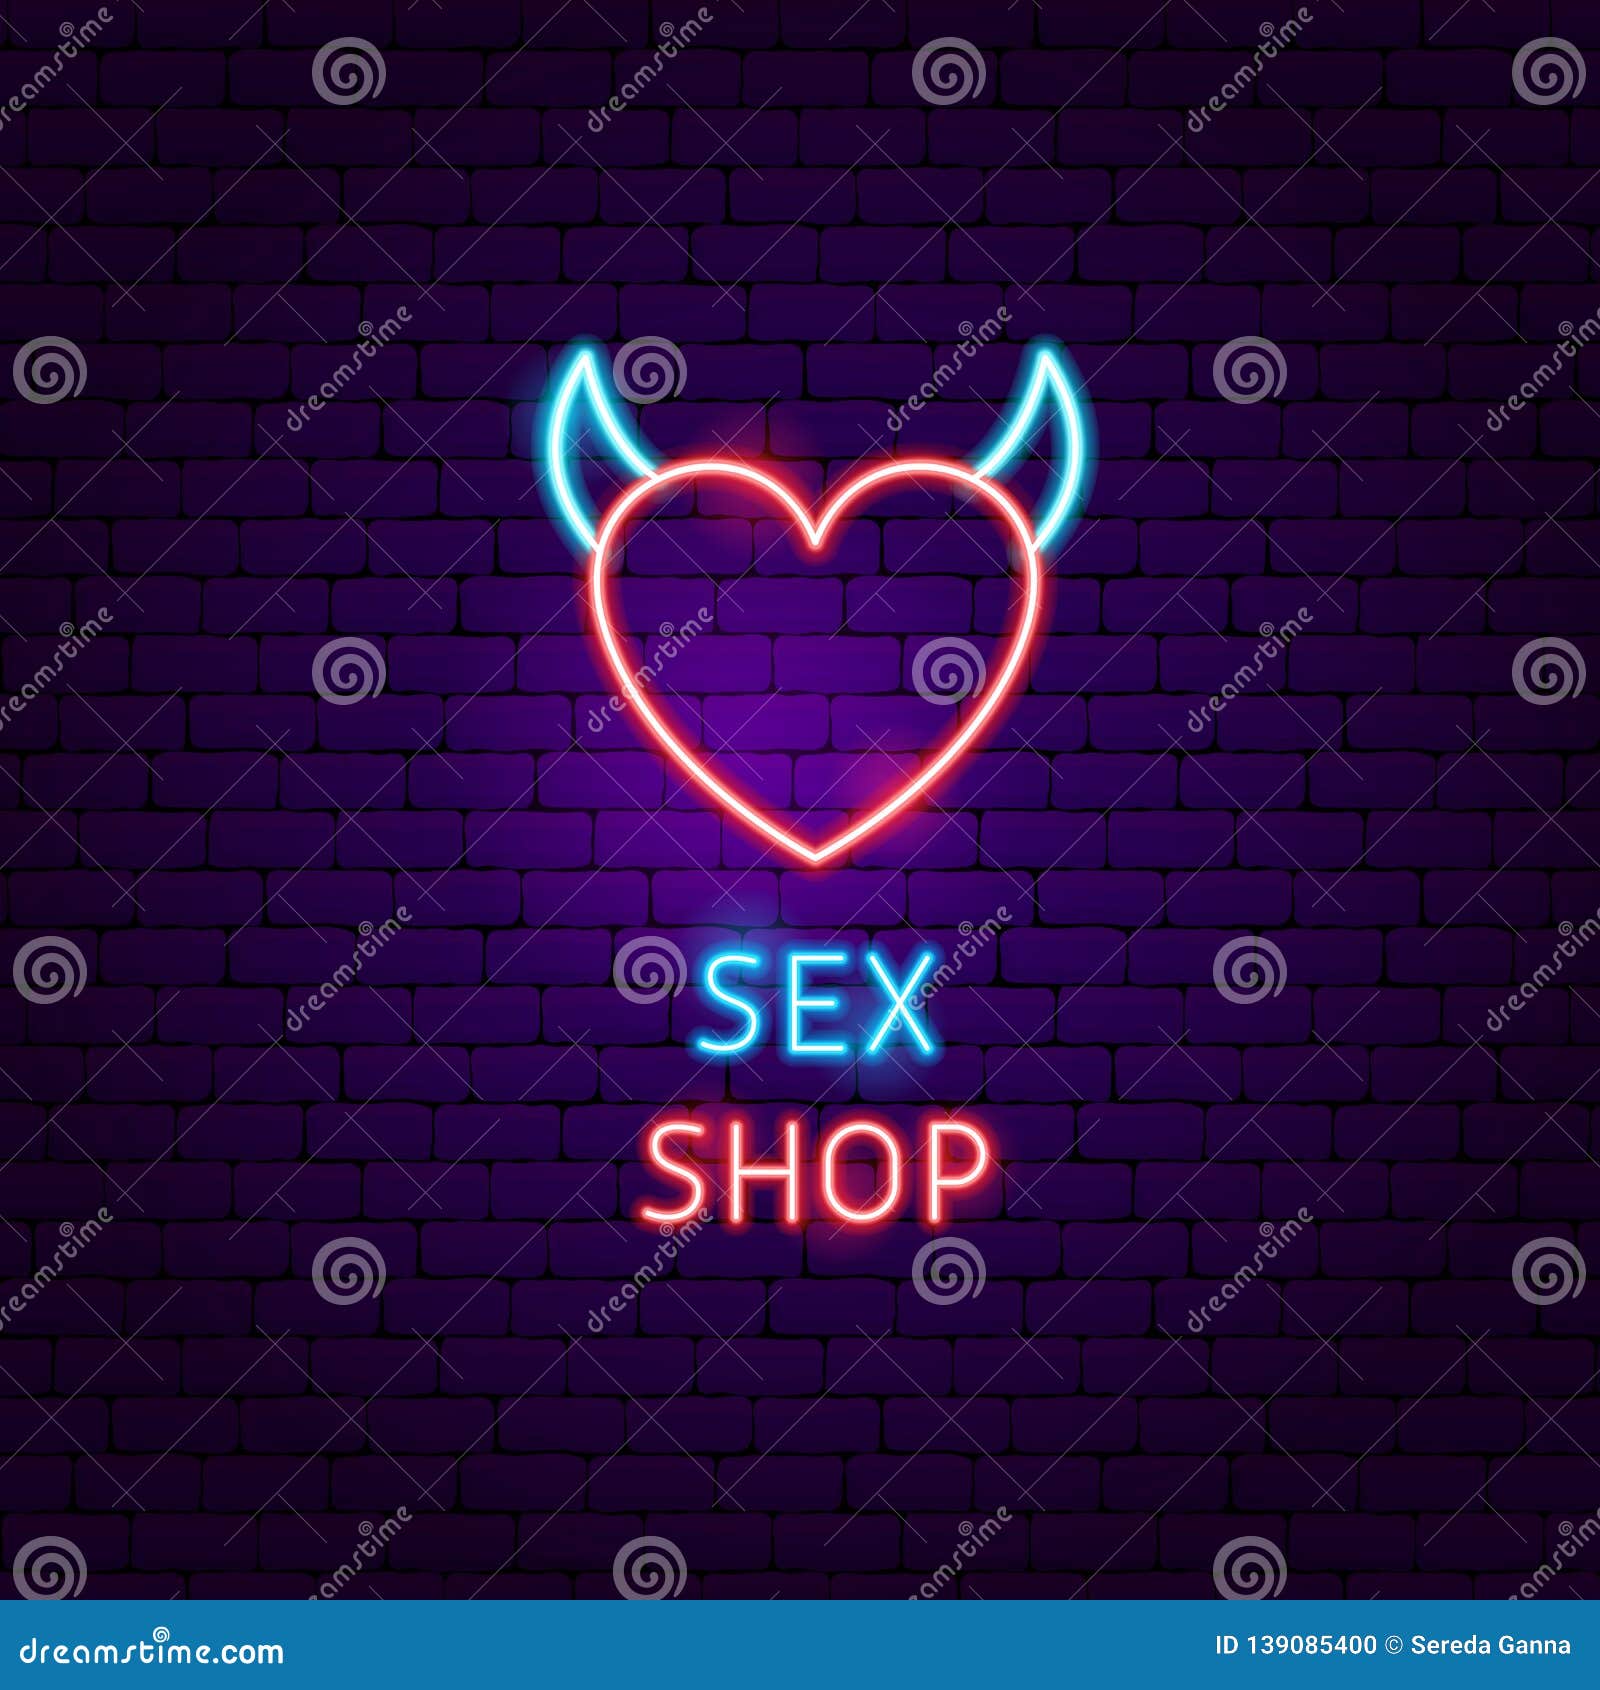 Sex Shop Neon Label Stock Vector Illustration Of Club 139085400